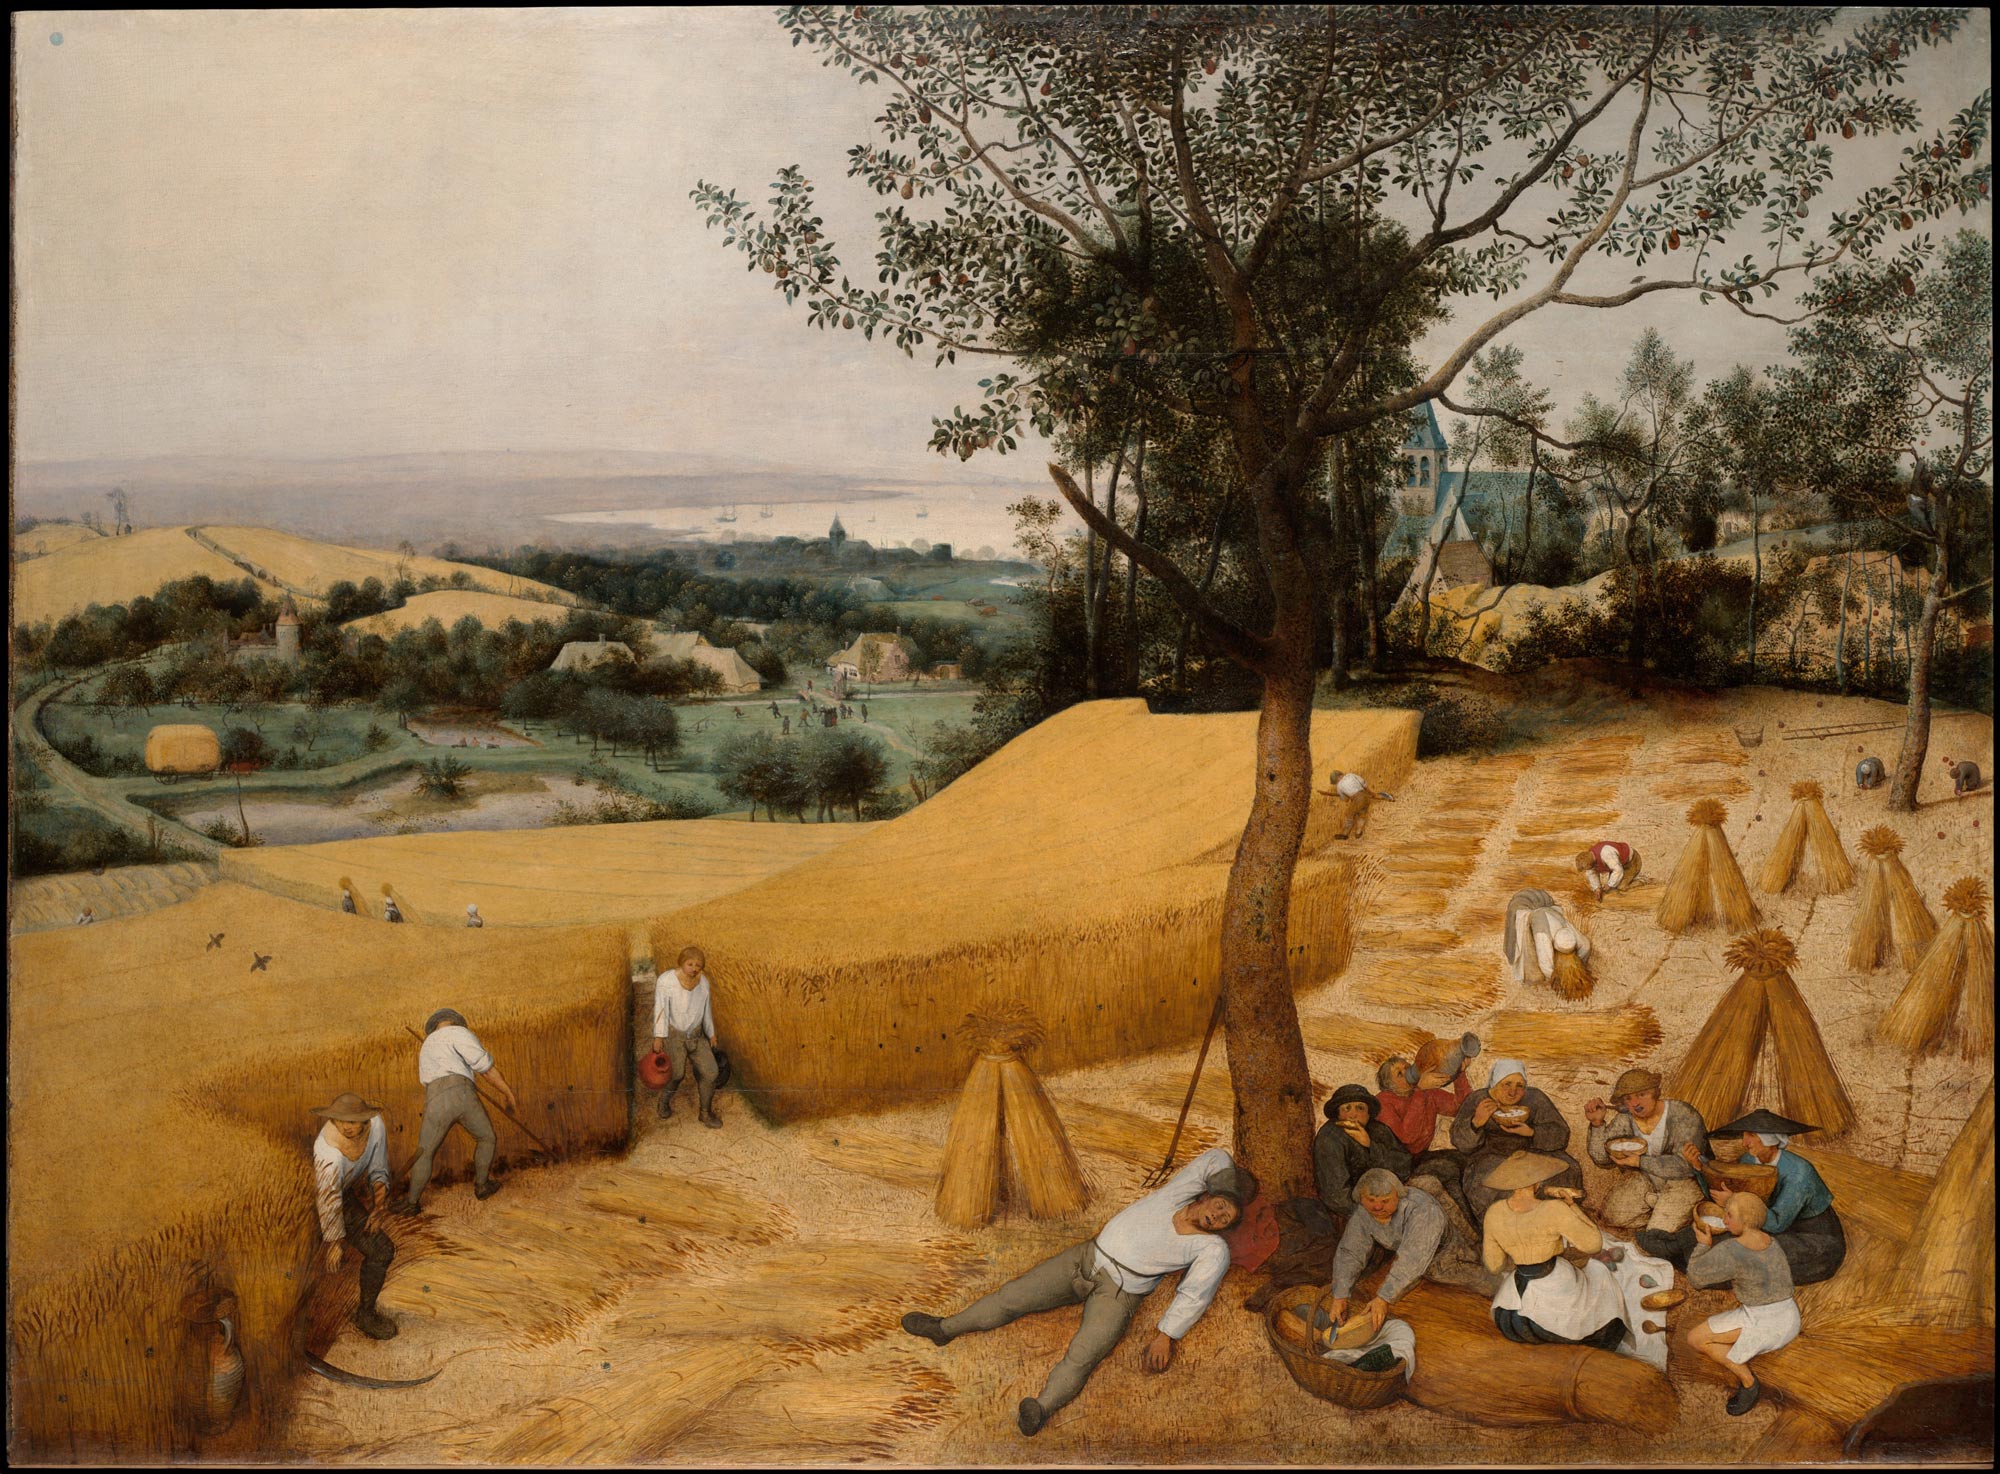 Pieter Bruegel, La mietitura (1565; olio su tavola, 119 x 162 cm; New York, The Metropolitan Museum)
